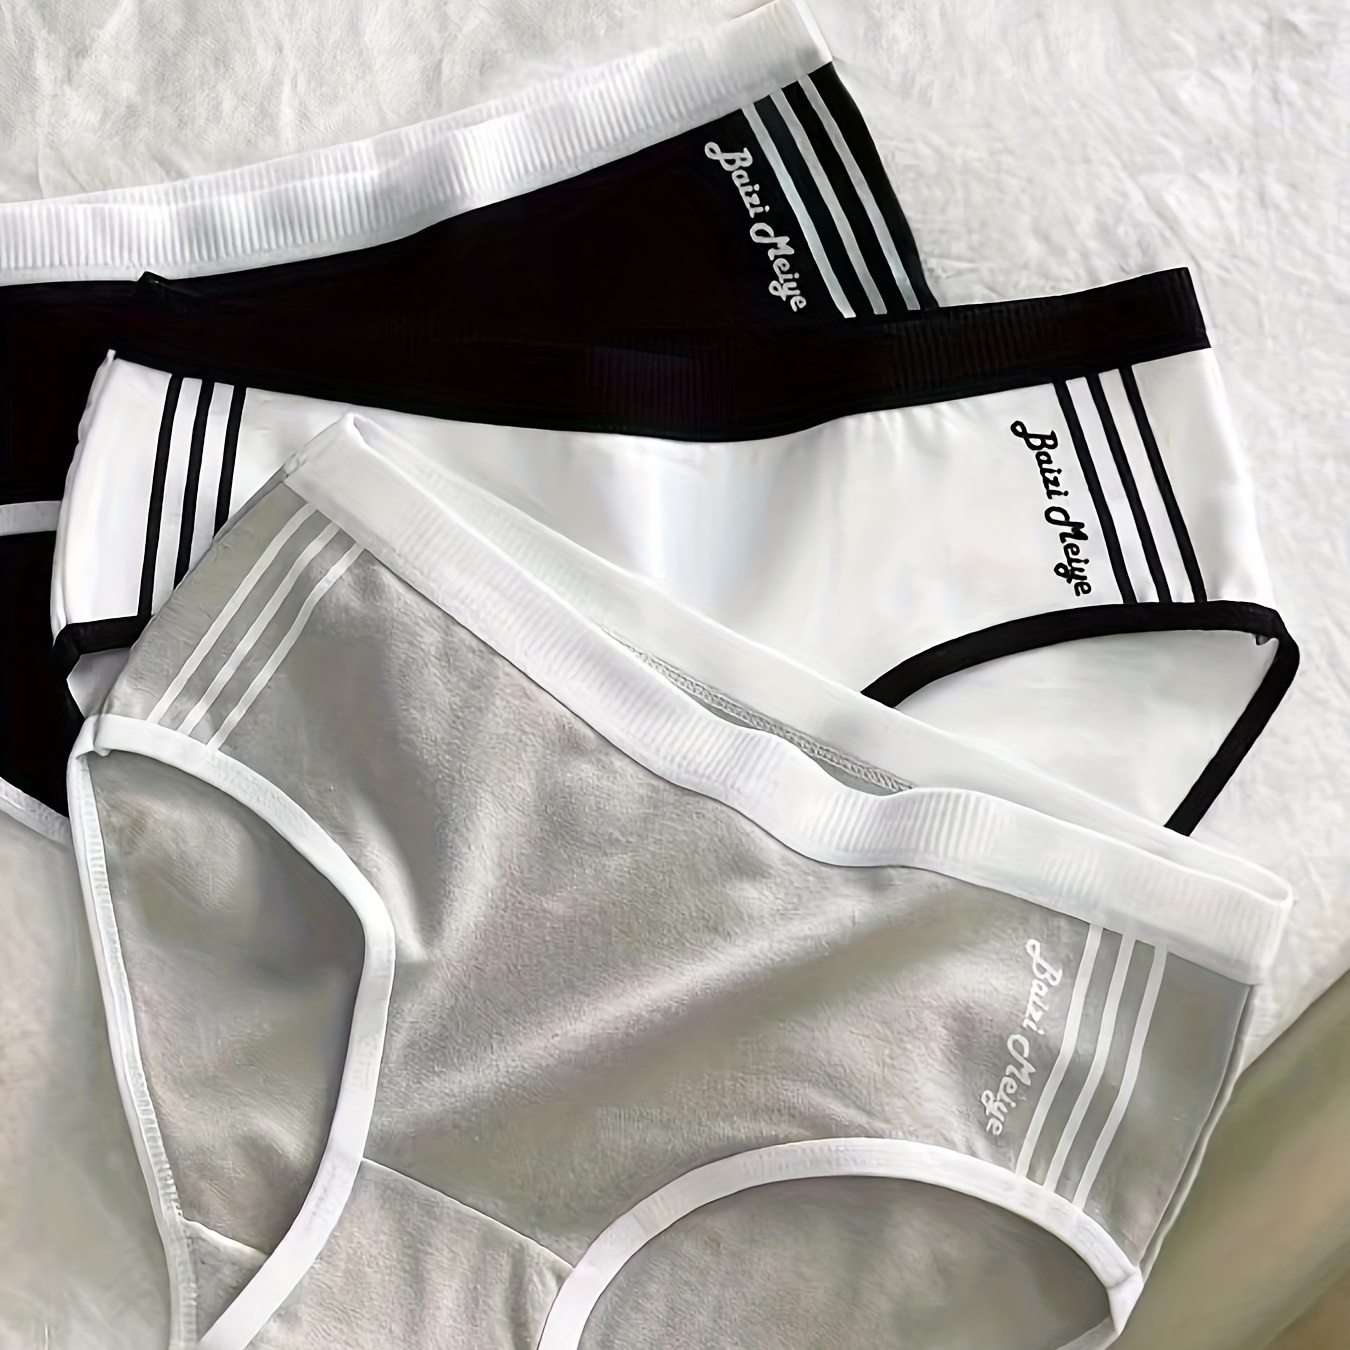 

3pcs Stripes Letter Print Briefs, Cute Comfy Breathable Stretchy Intimates Panties, Women's Lingerie & Underwear